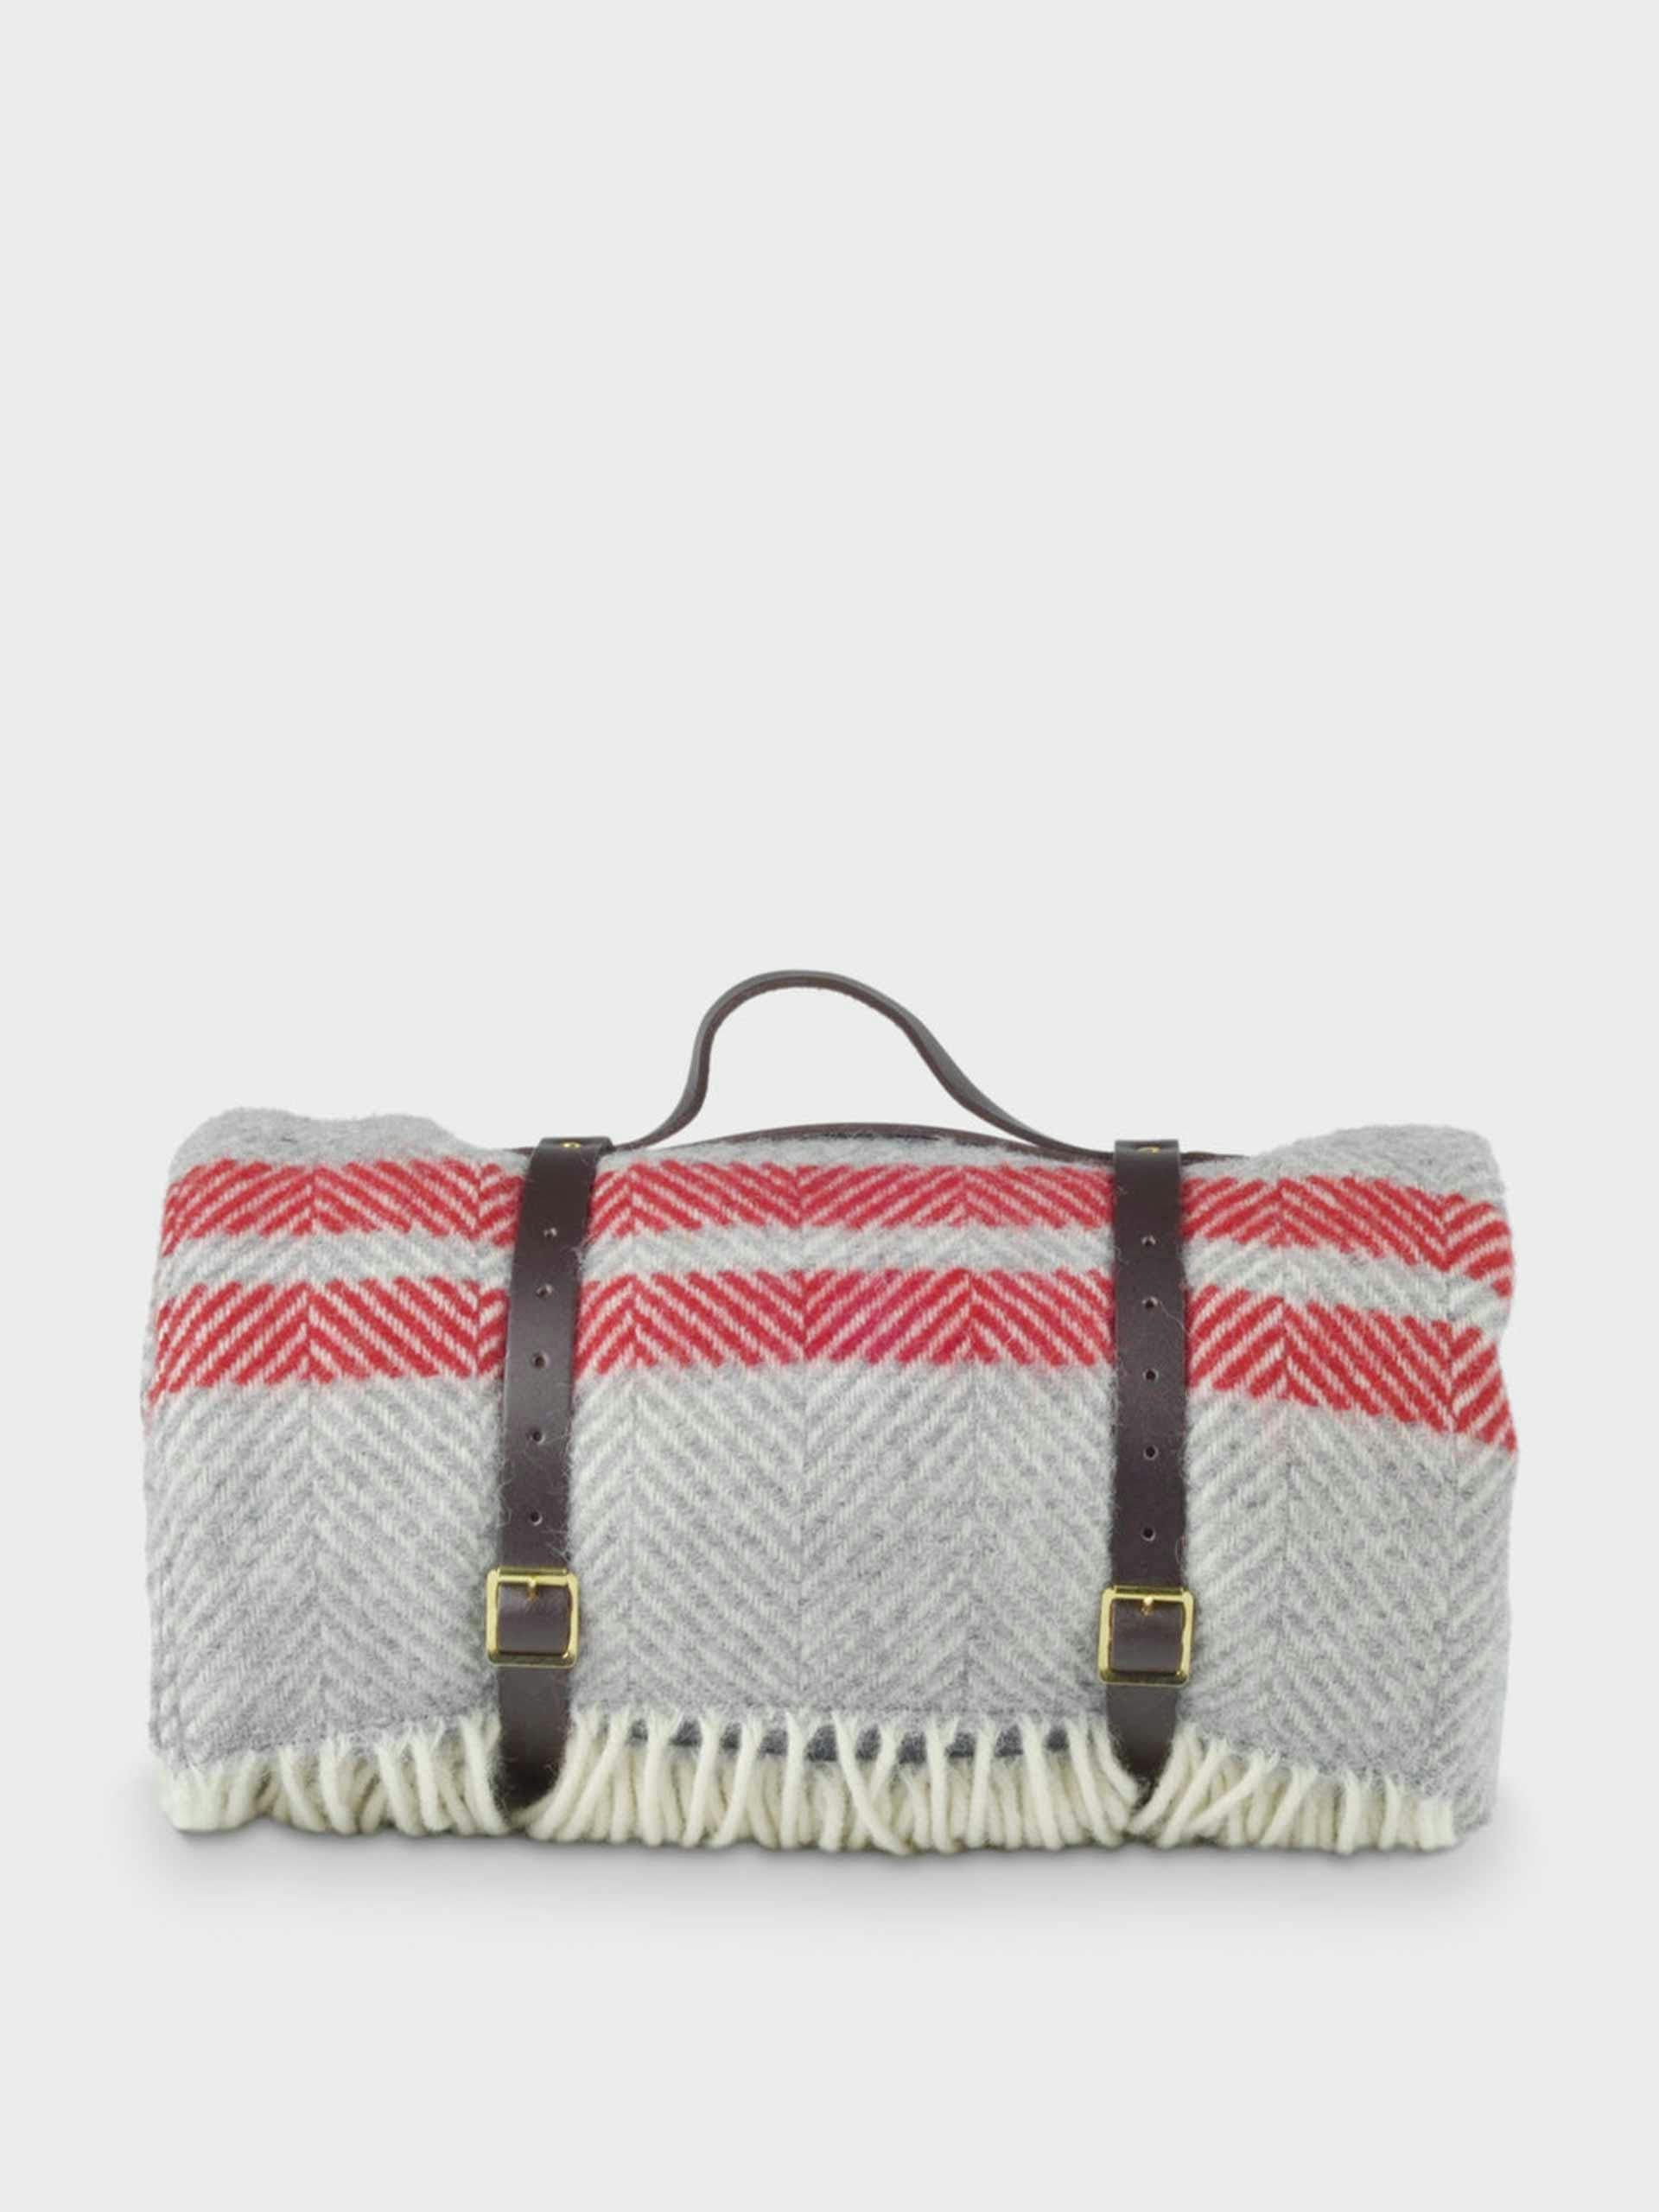 Grey and red waterproof picnic blanket